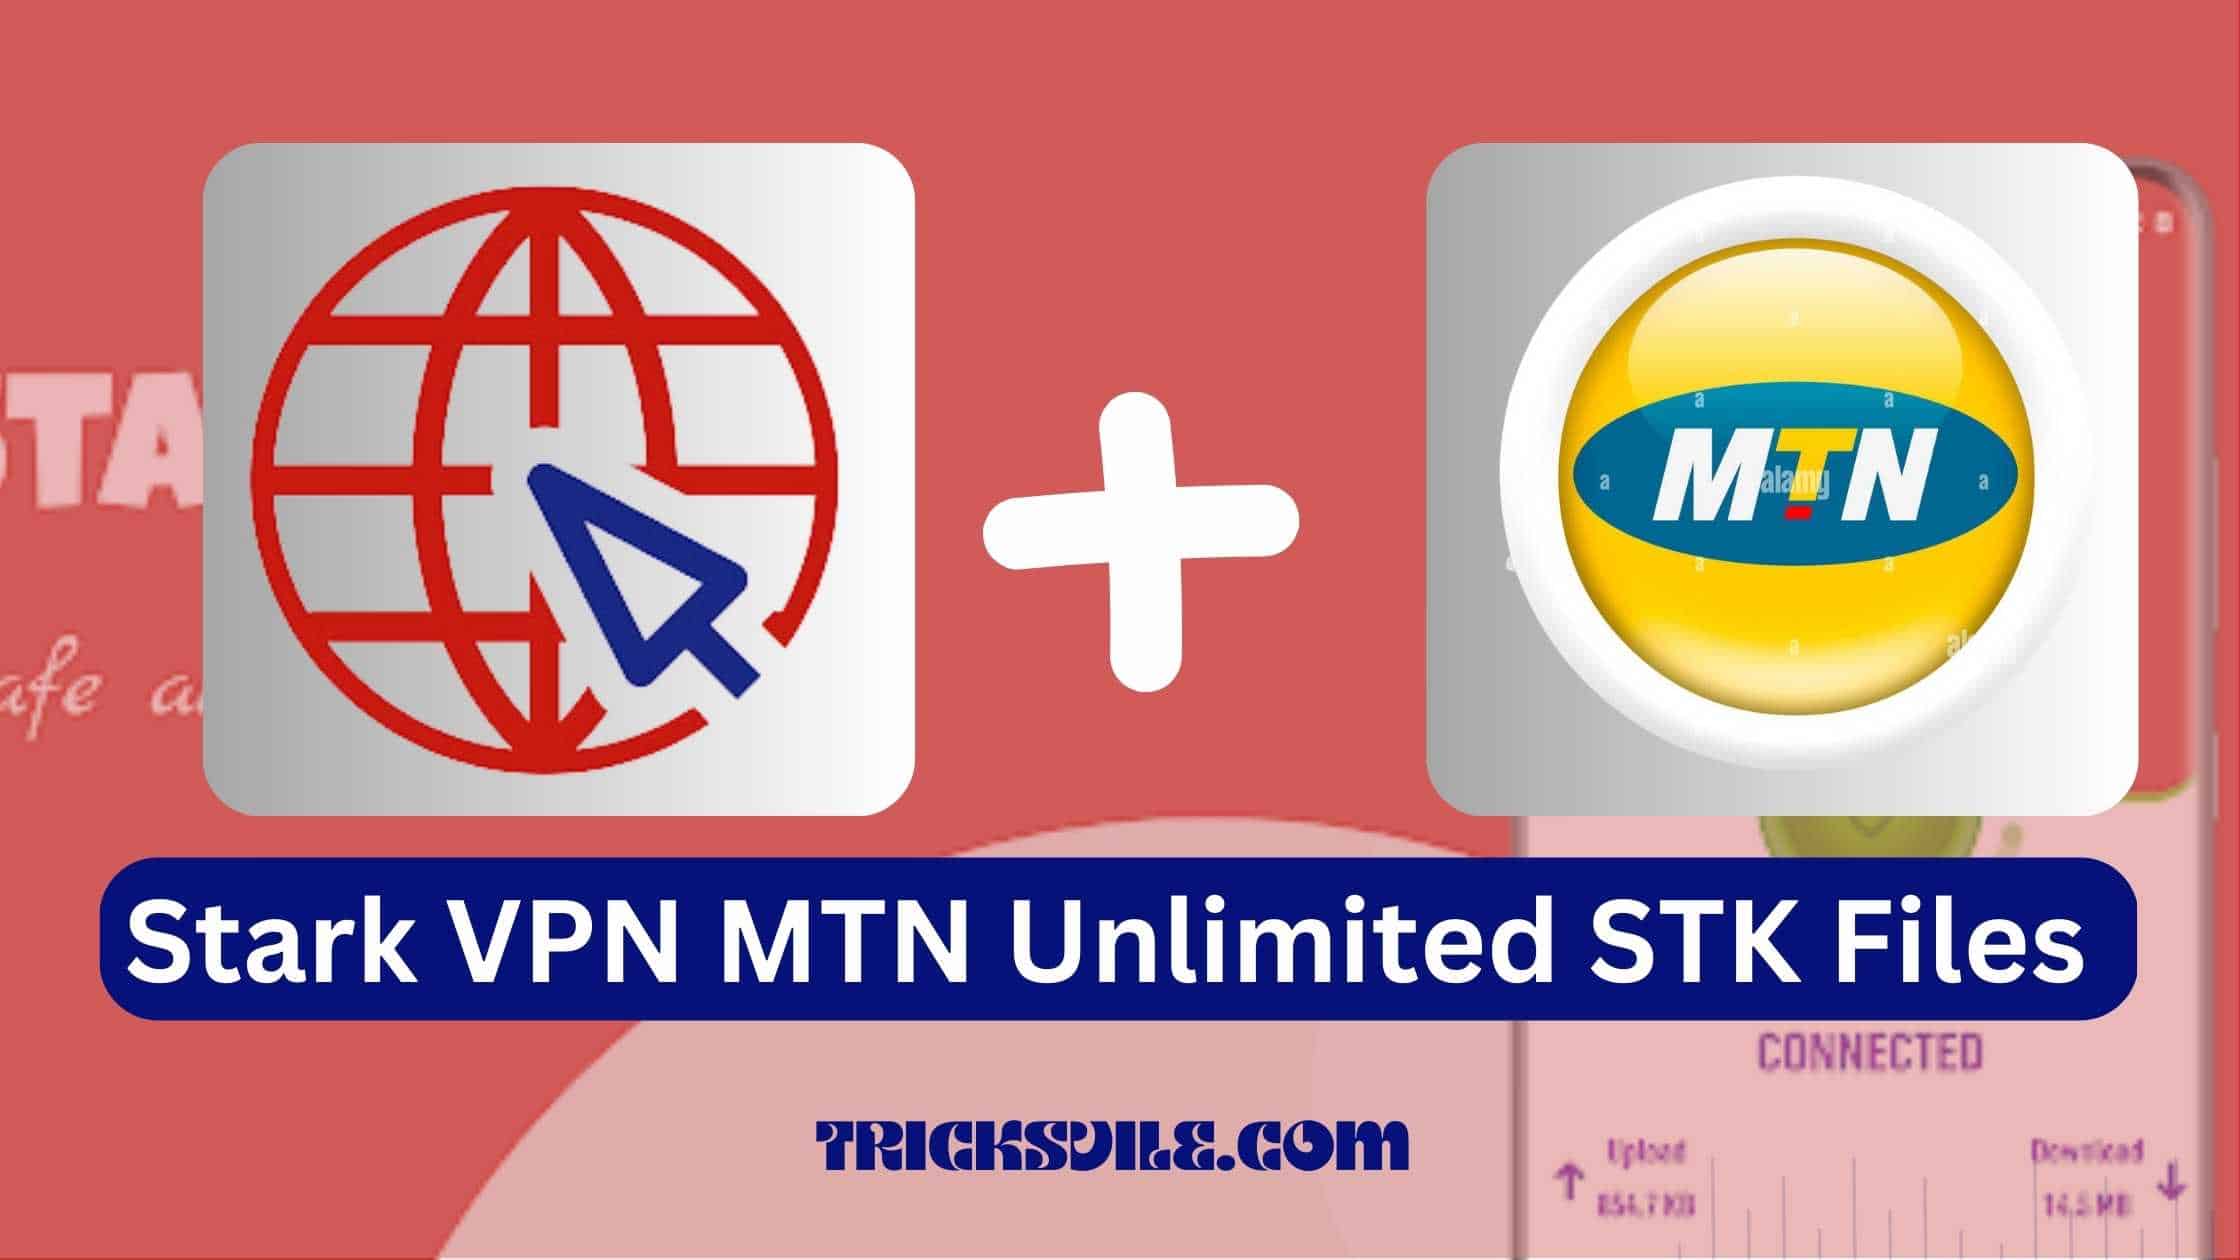 Stark VPN MTN Unlimited STK Files 